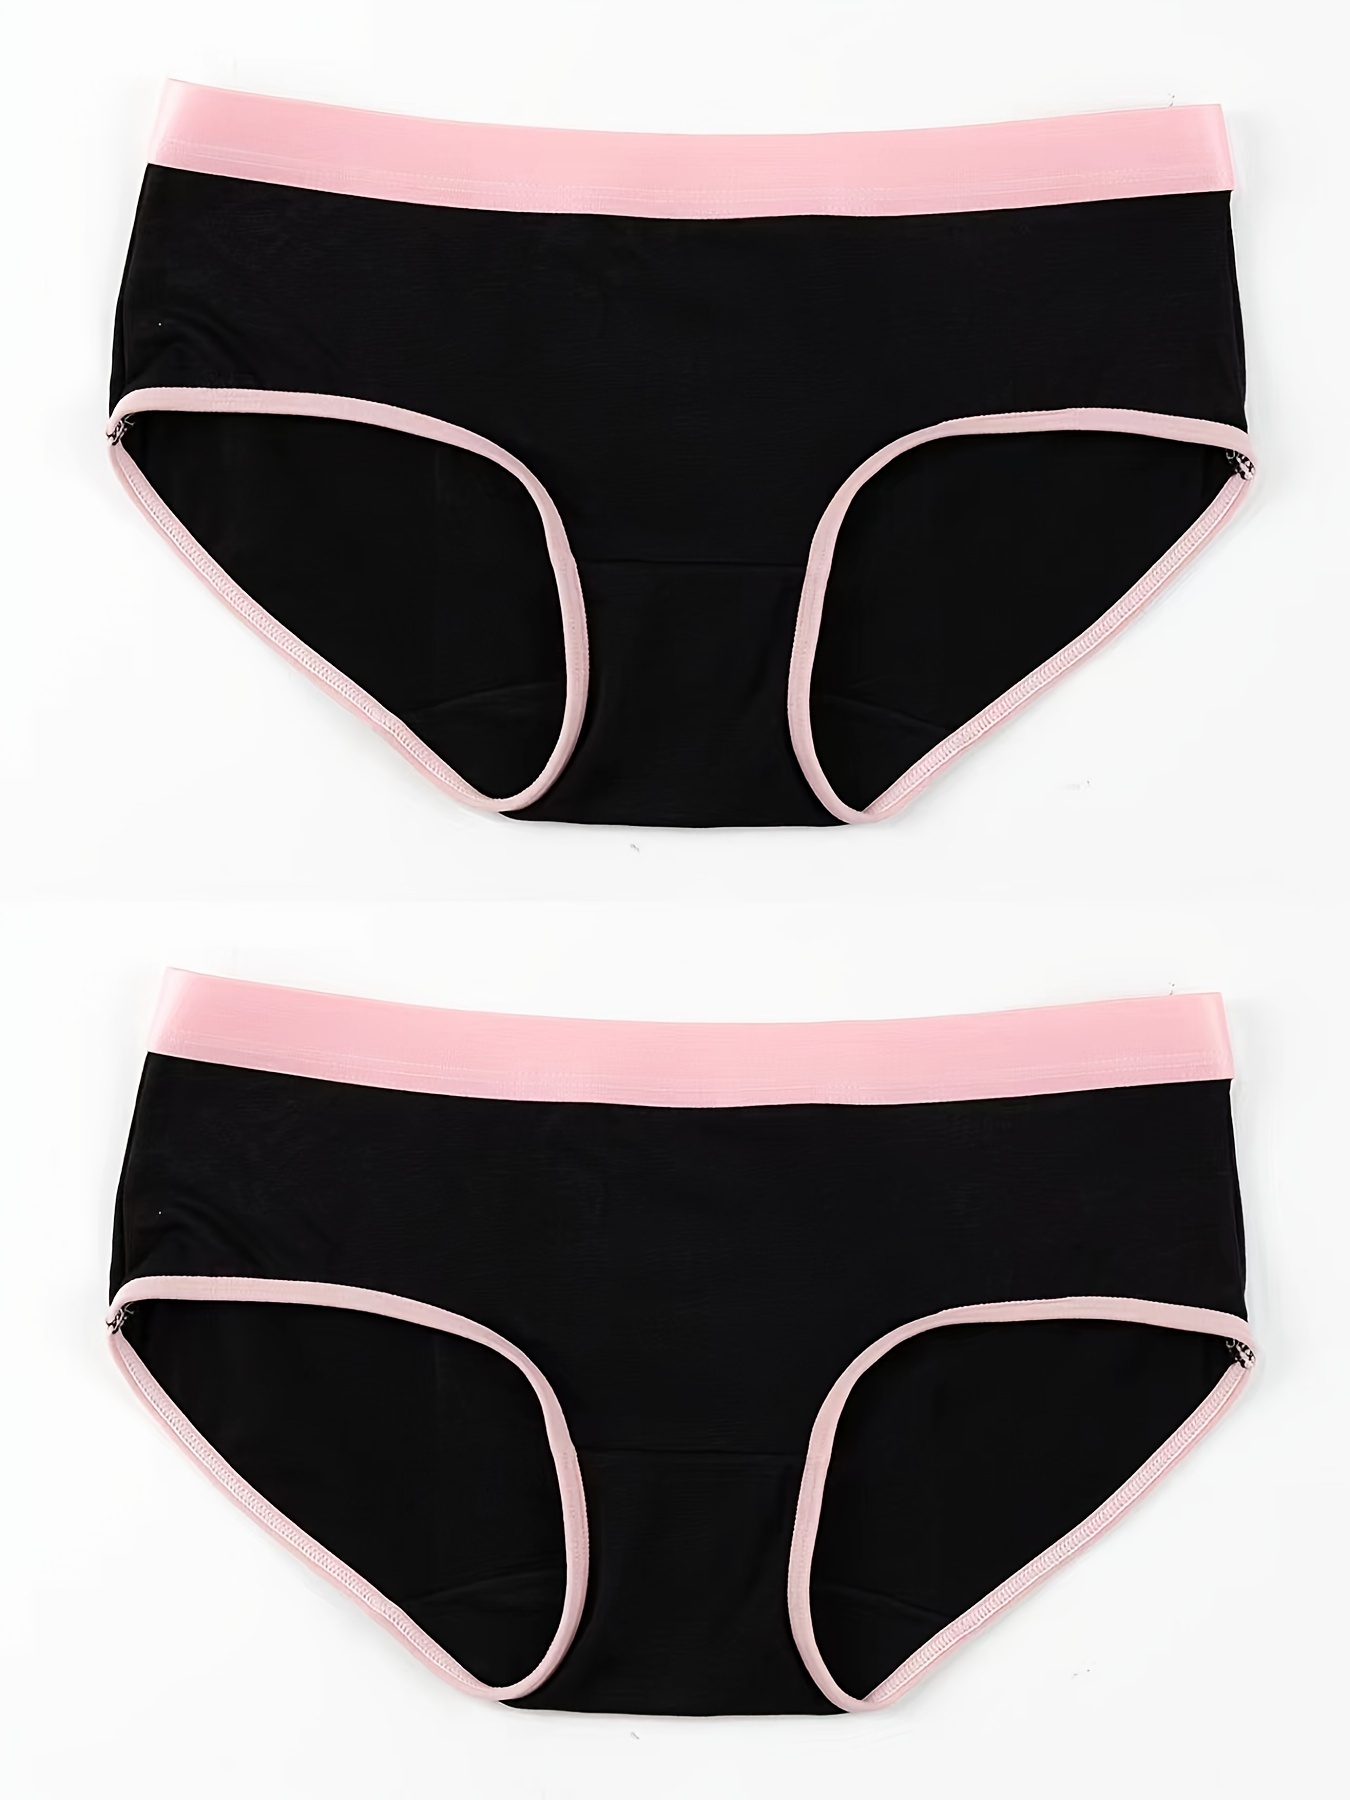 Couple Underwear  Mix Match Undies for Couples - Soft Breathable